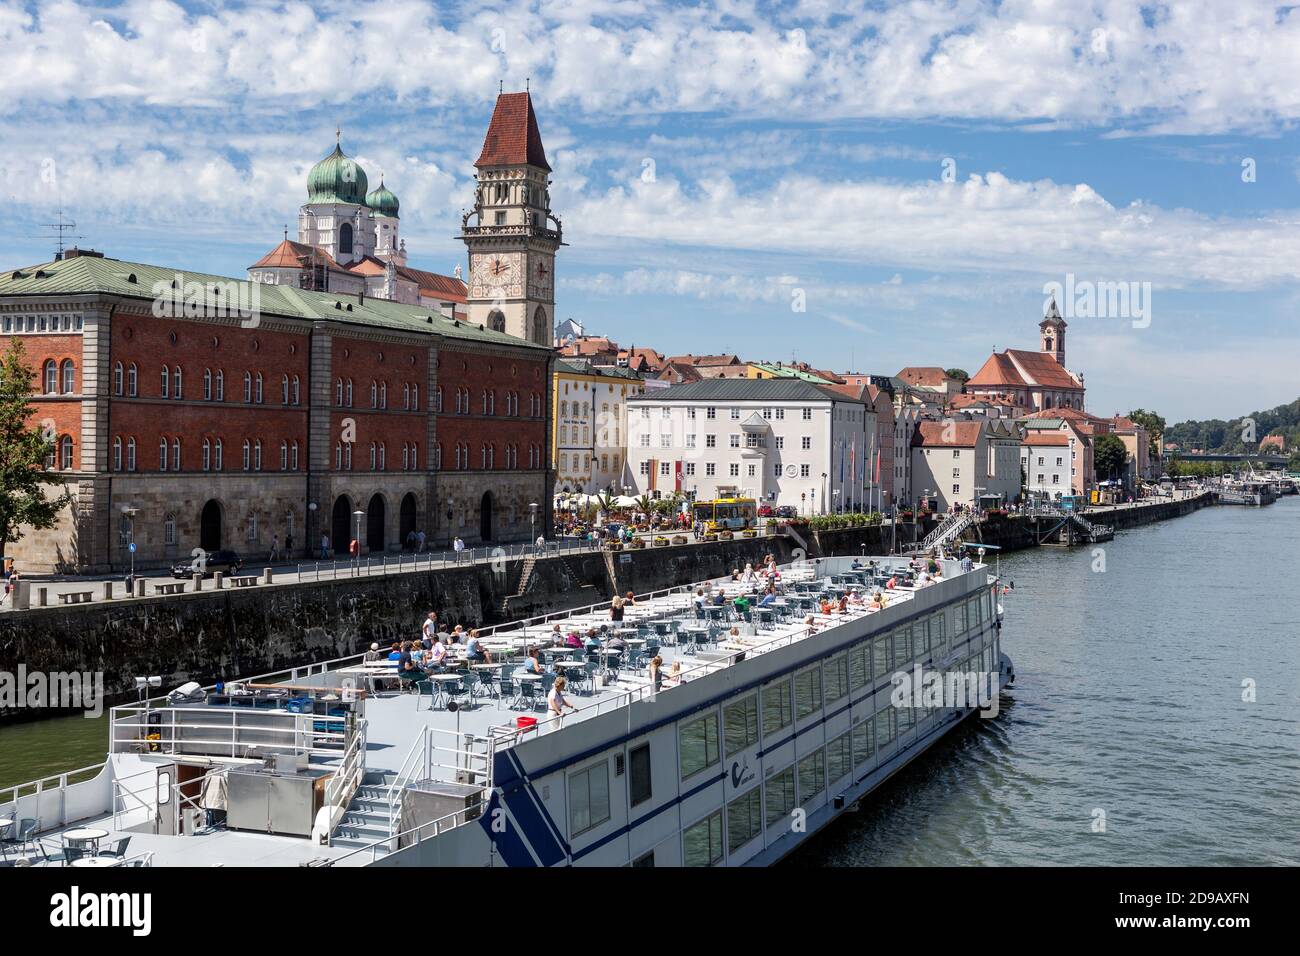 Donau Passau Flusskreuzfahrt mit Touristen an Bord Ankunft am Pier Stockfoto